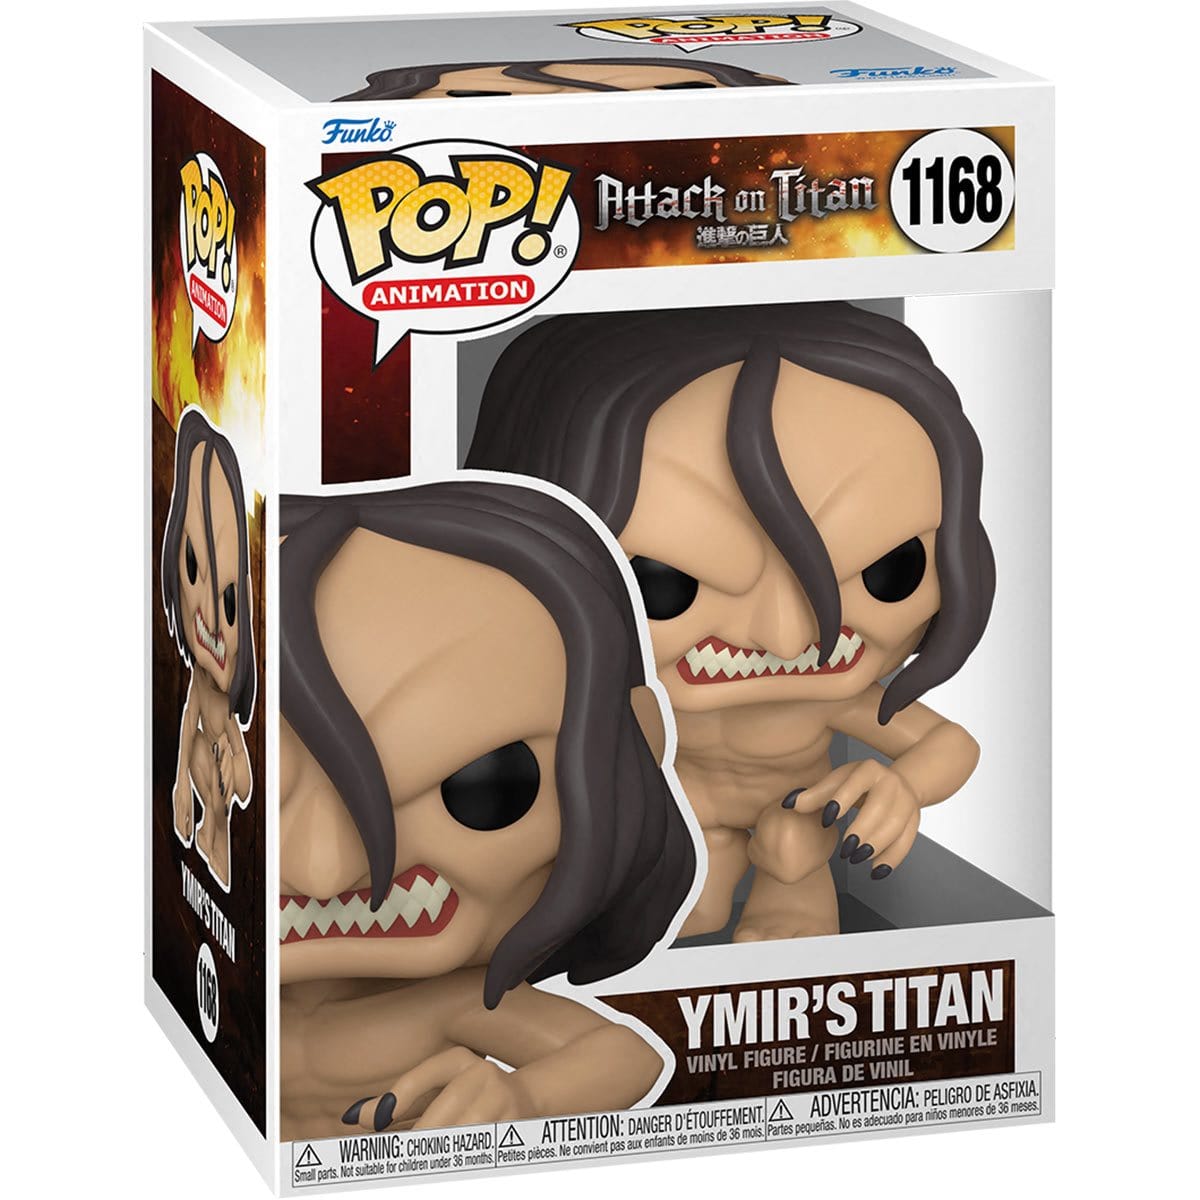 Attack on Titan Ymir's Titan Pop! Vinyl Figure